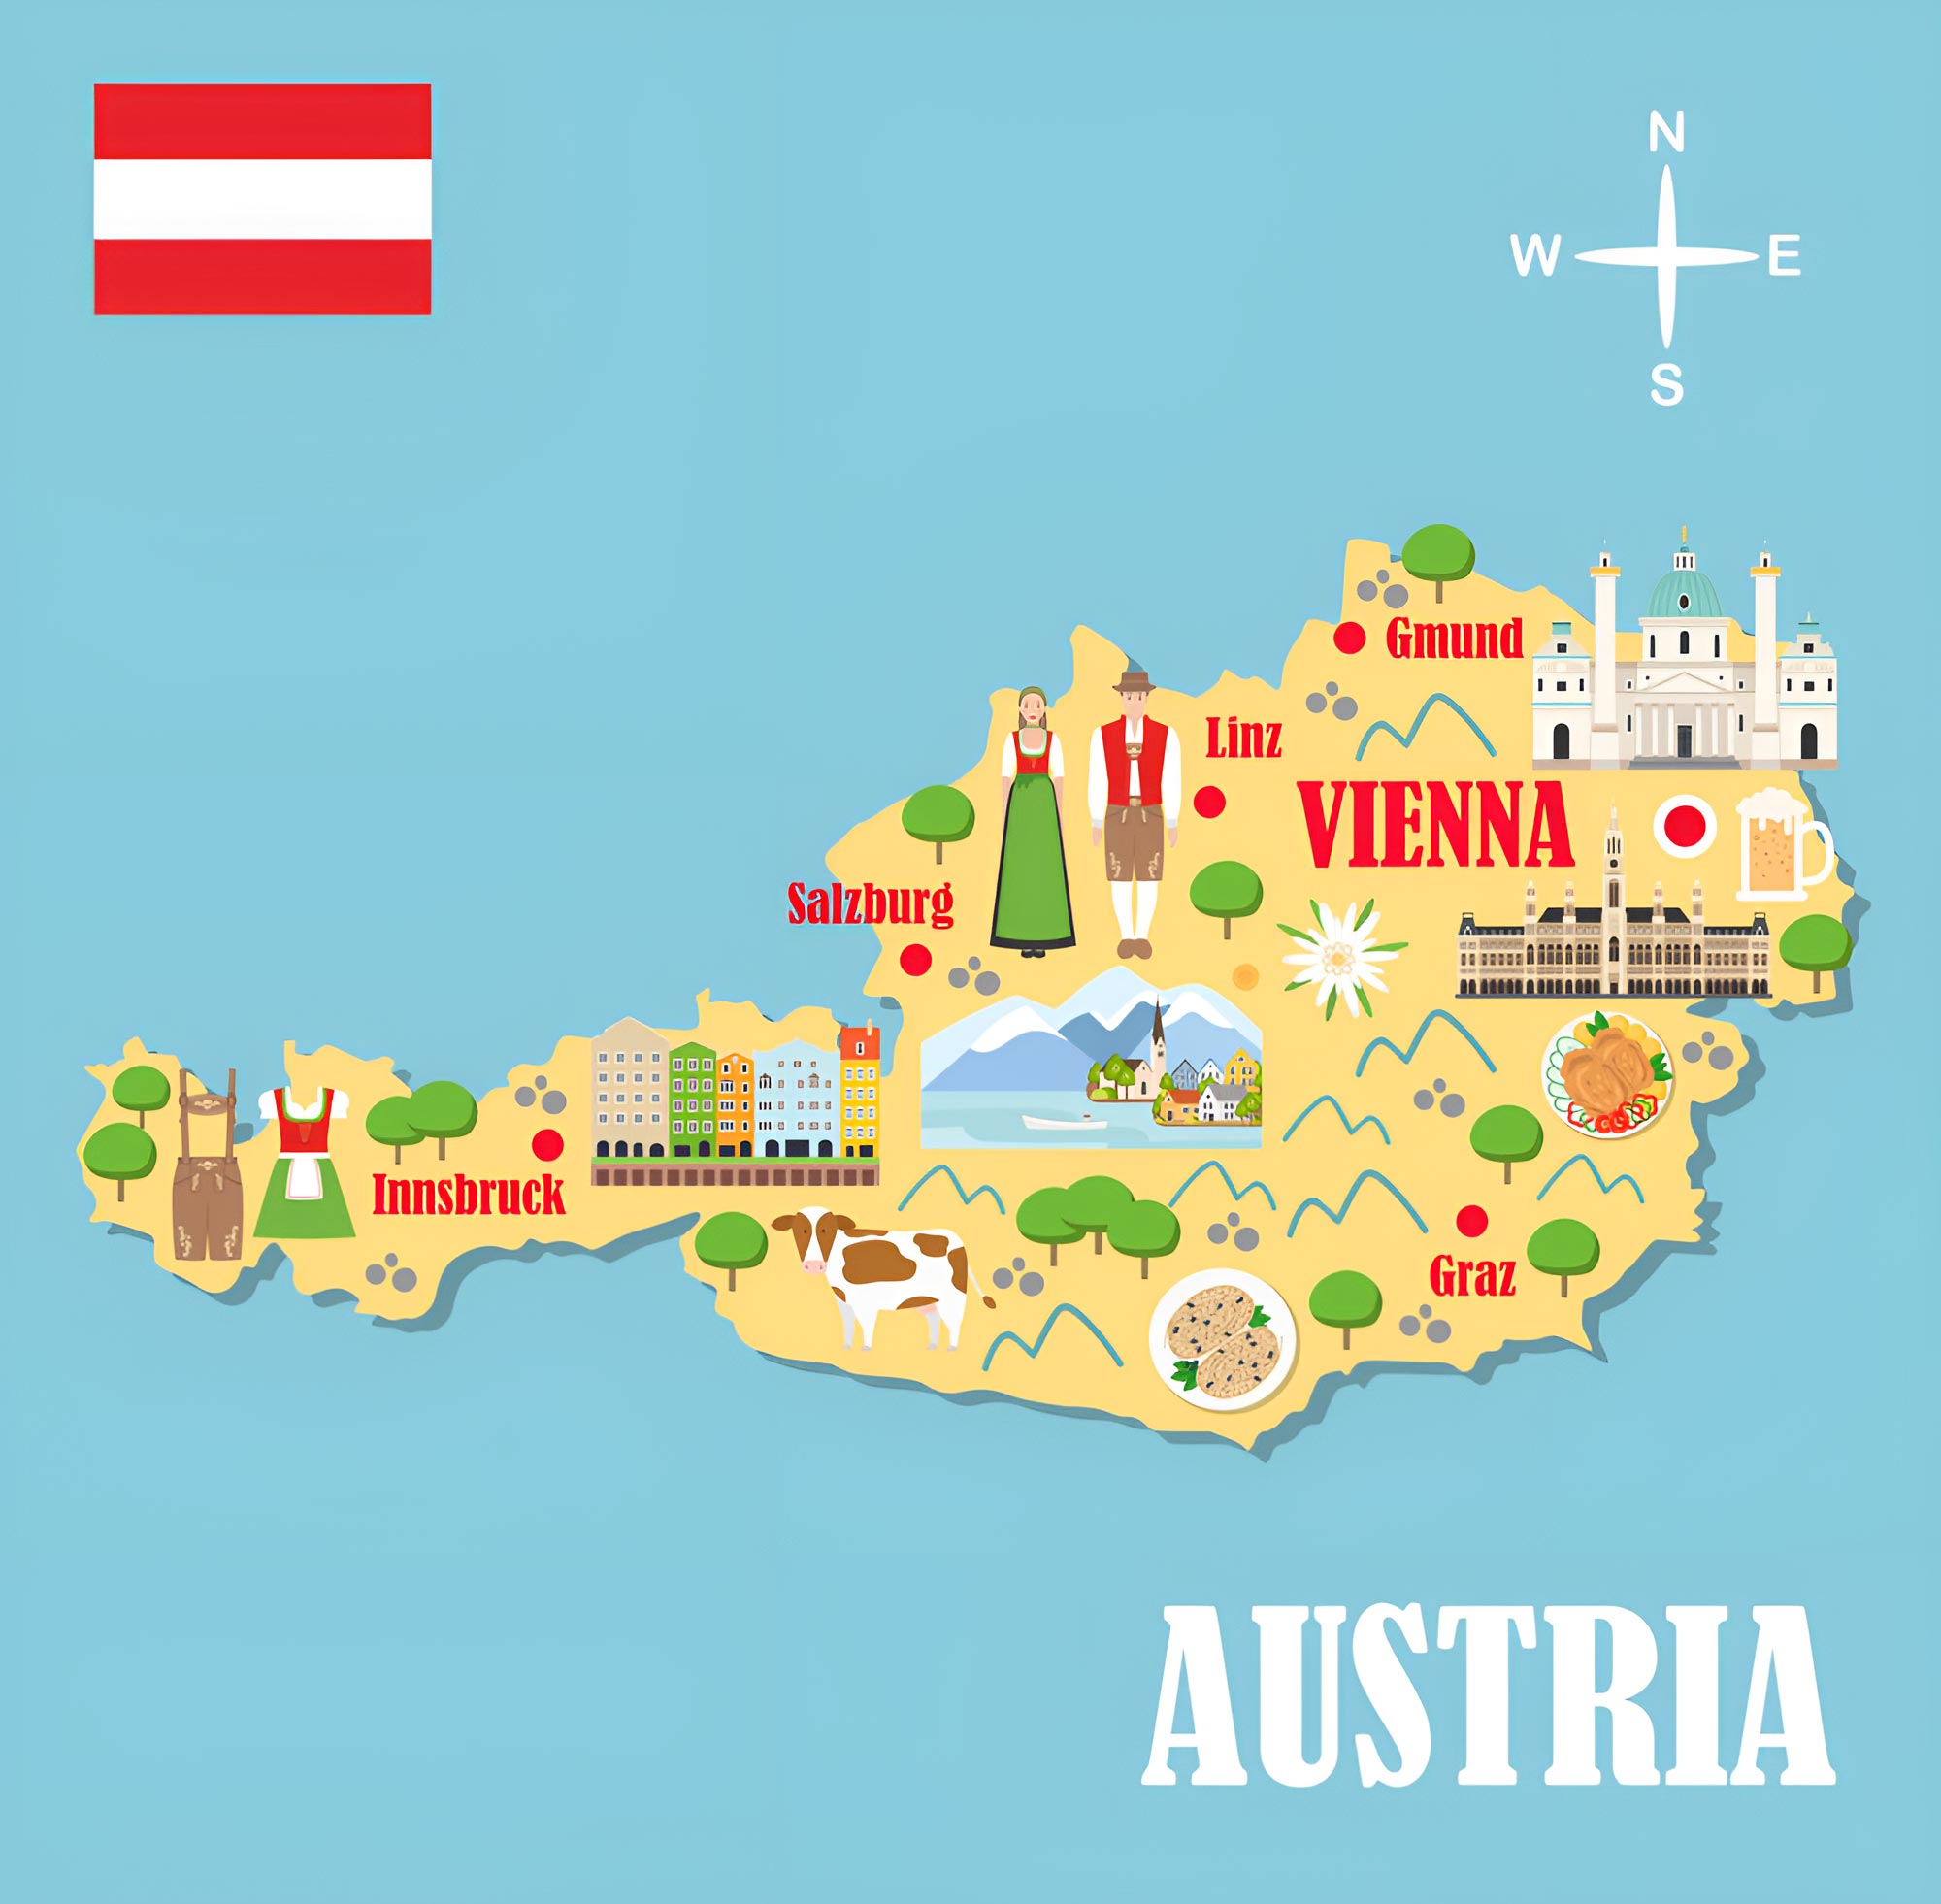 Austria Travel-Tourist Map